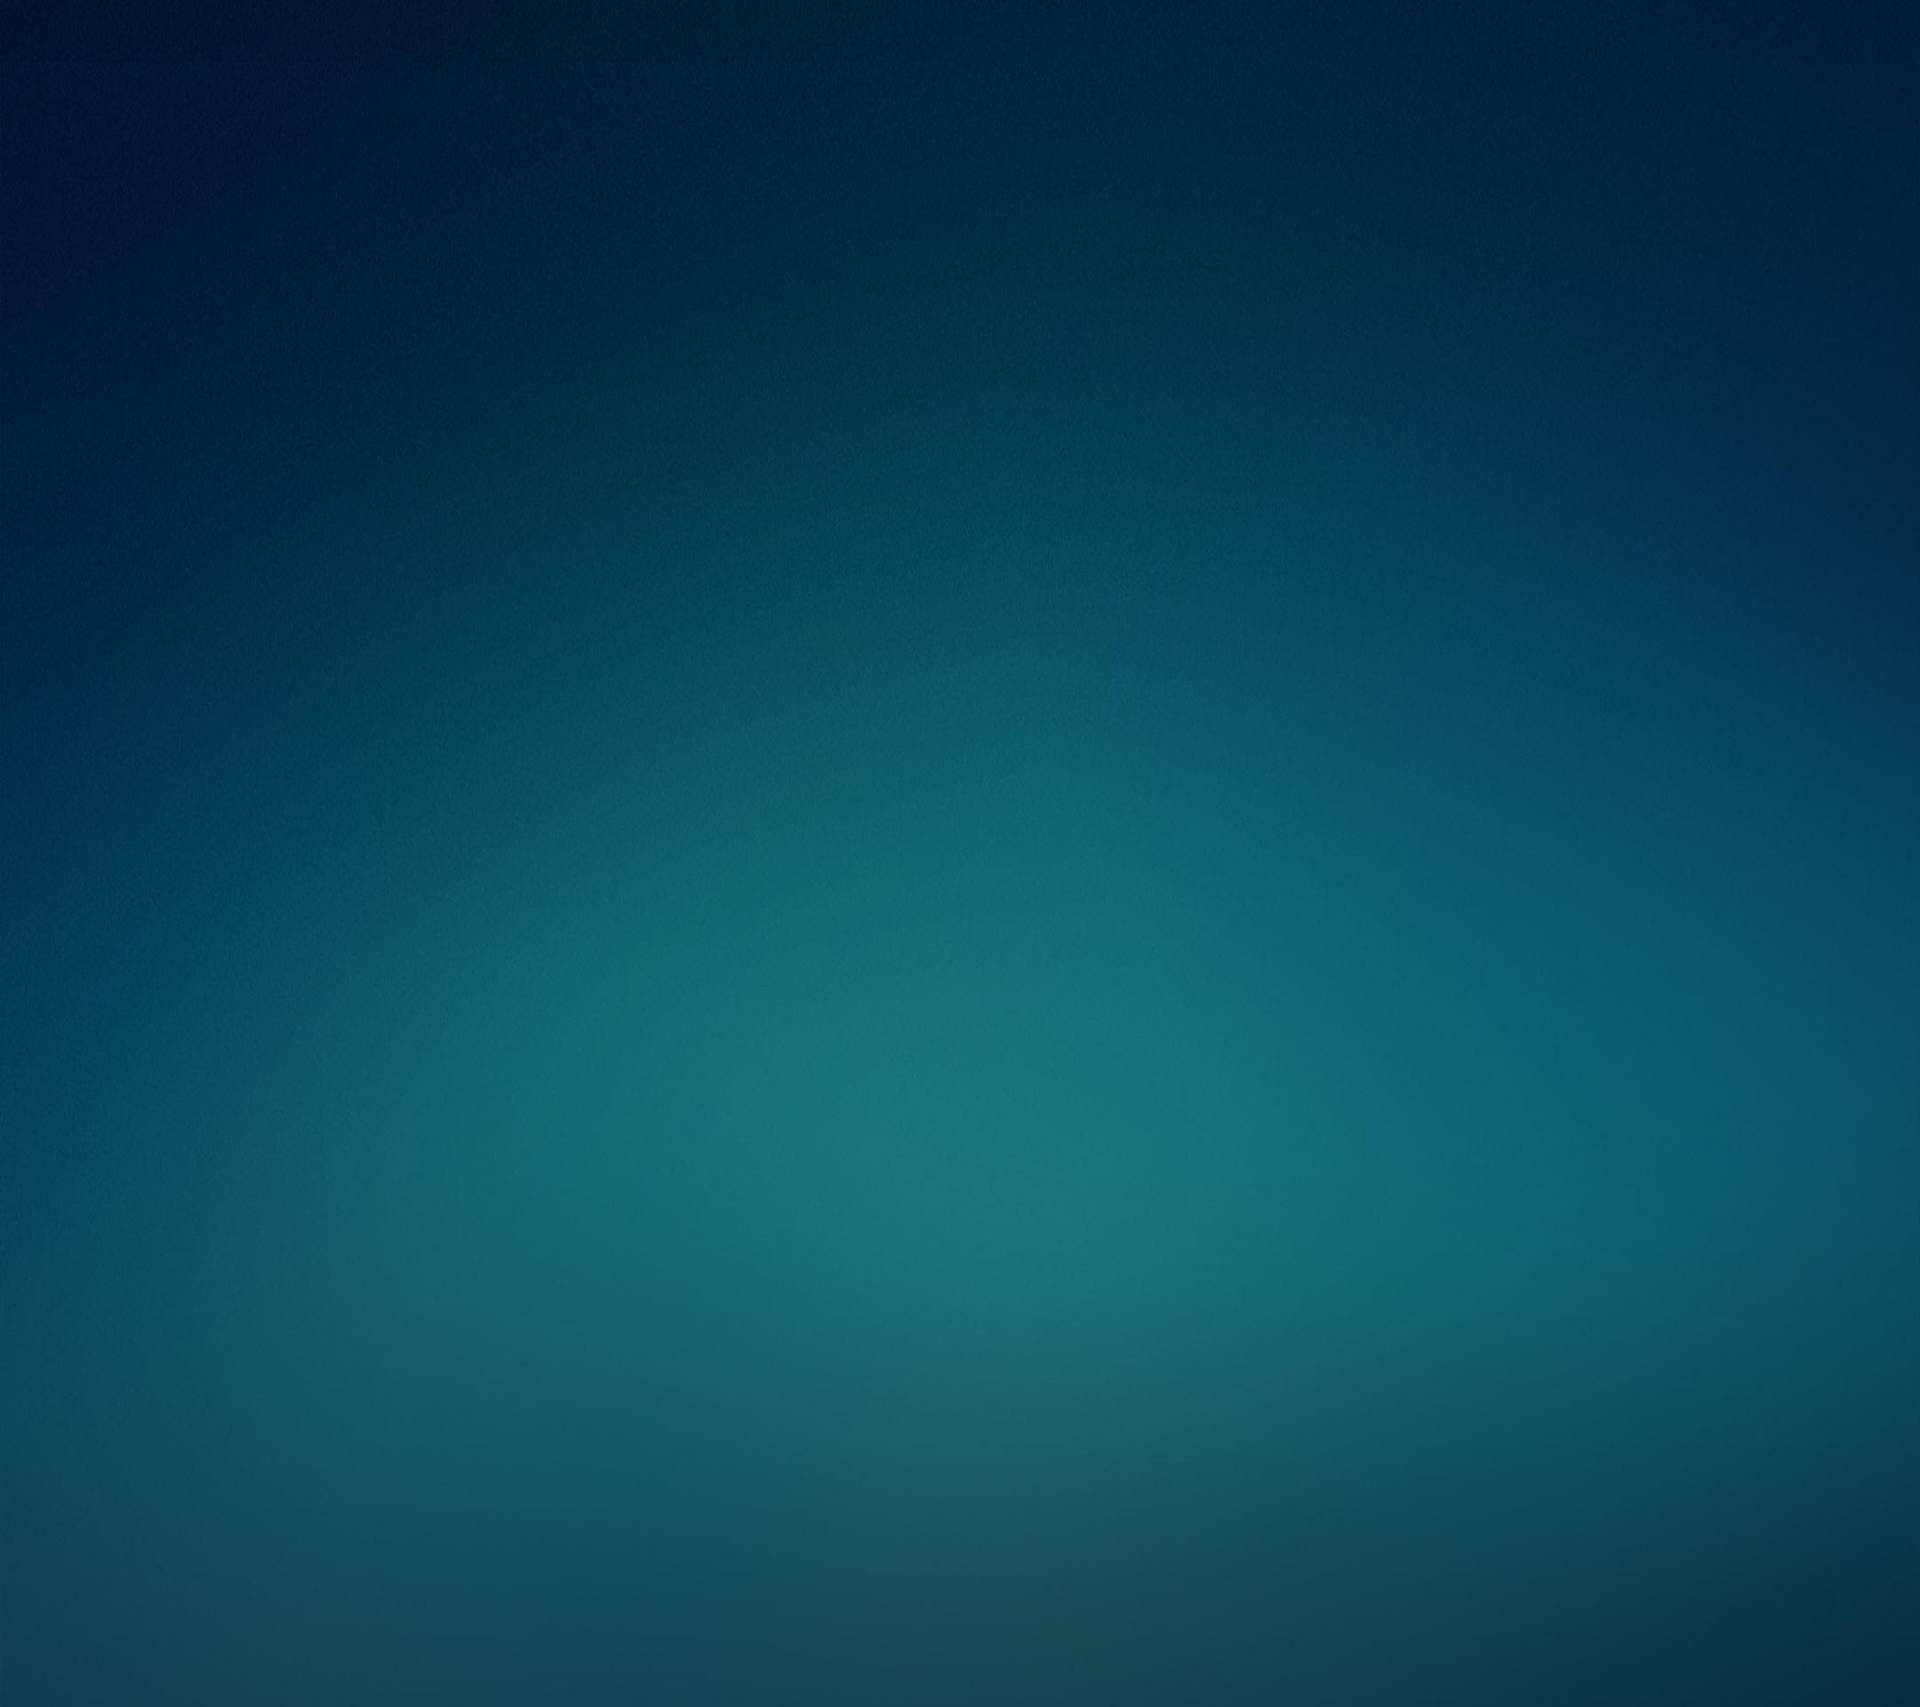 Xiaomi Plain Blue Wallpaper